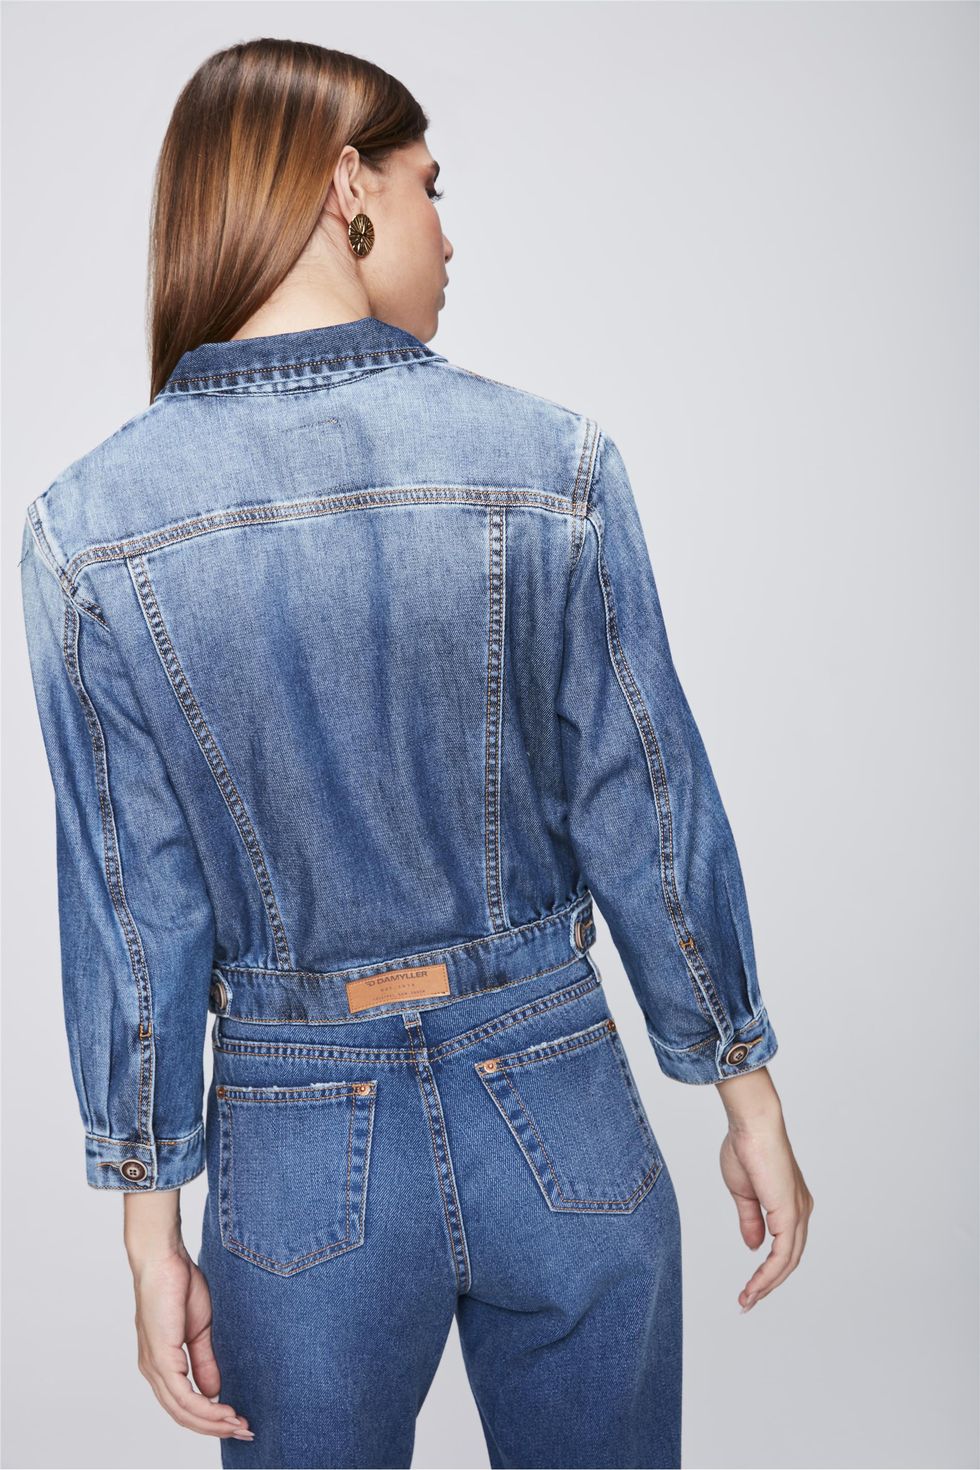 preço de jaqueta jeans feminina